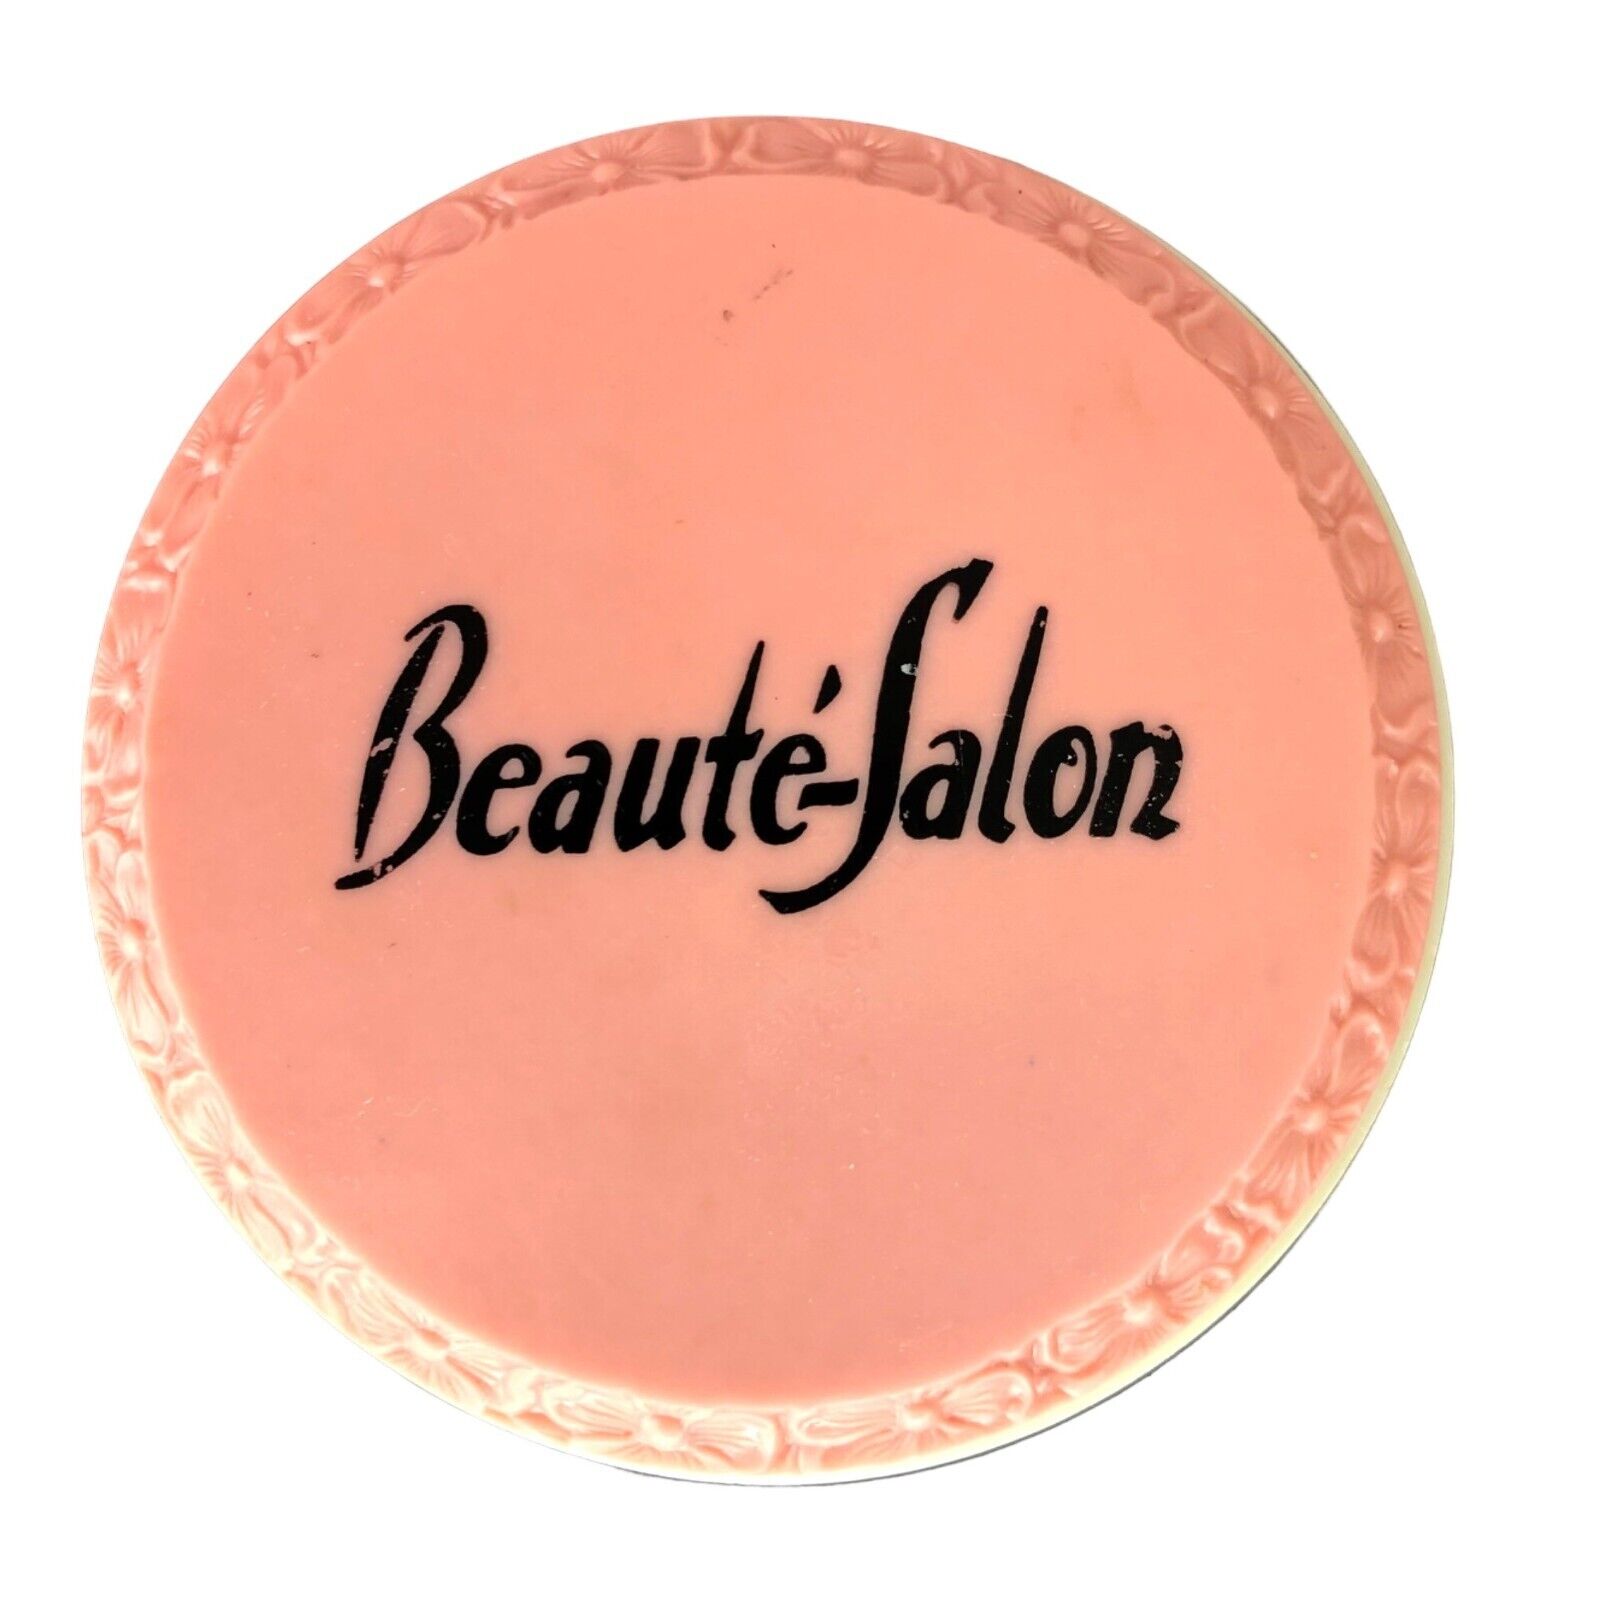 Beaute Salon Compact Powder Vintage 40\'s Original/Unused/Novelty